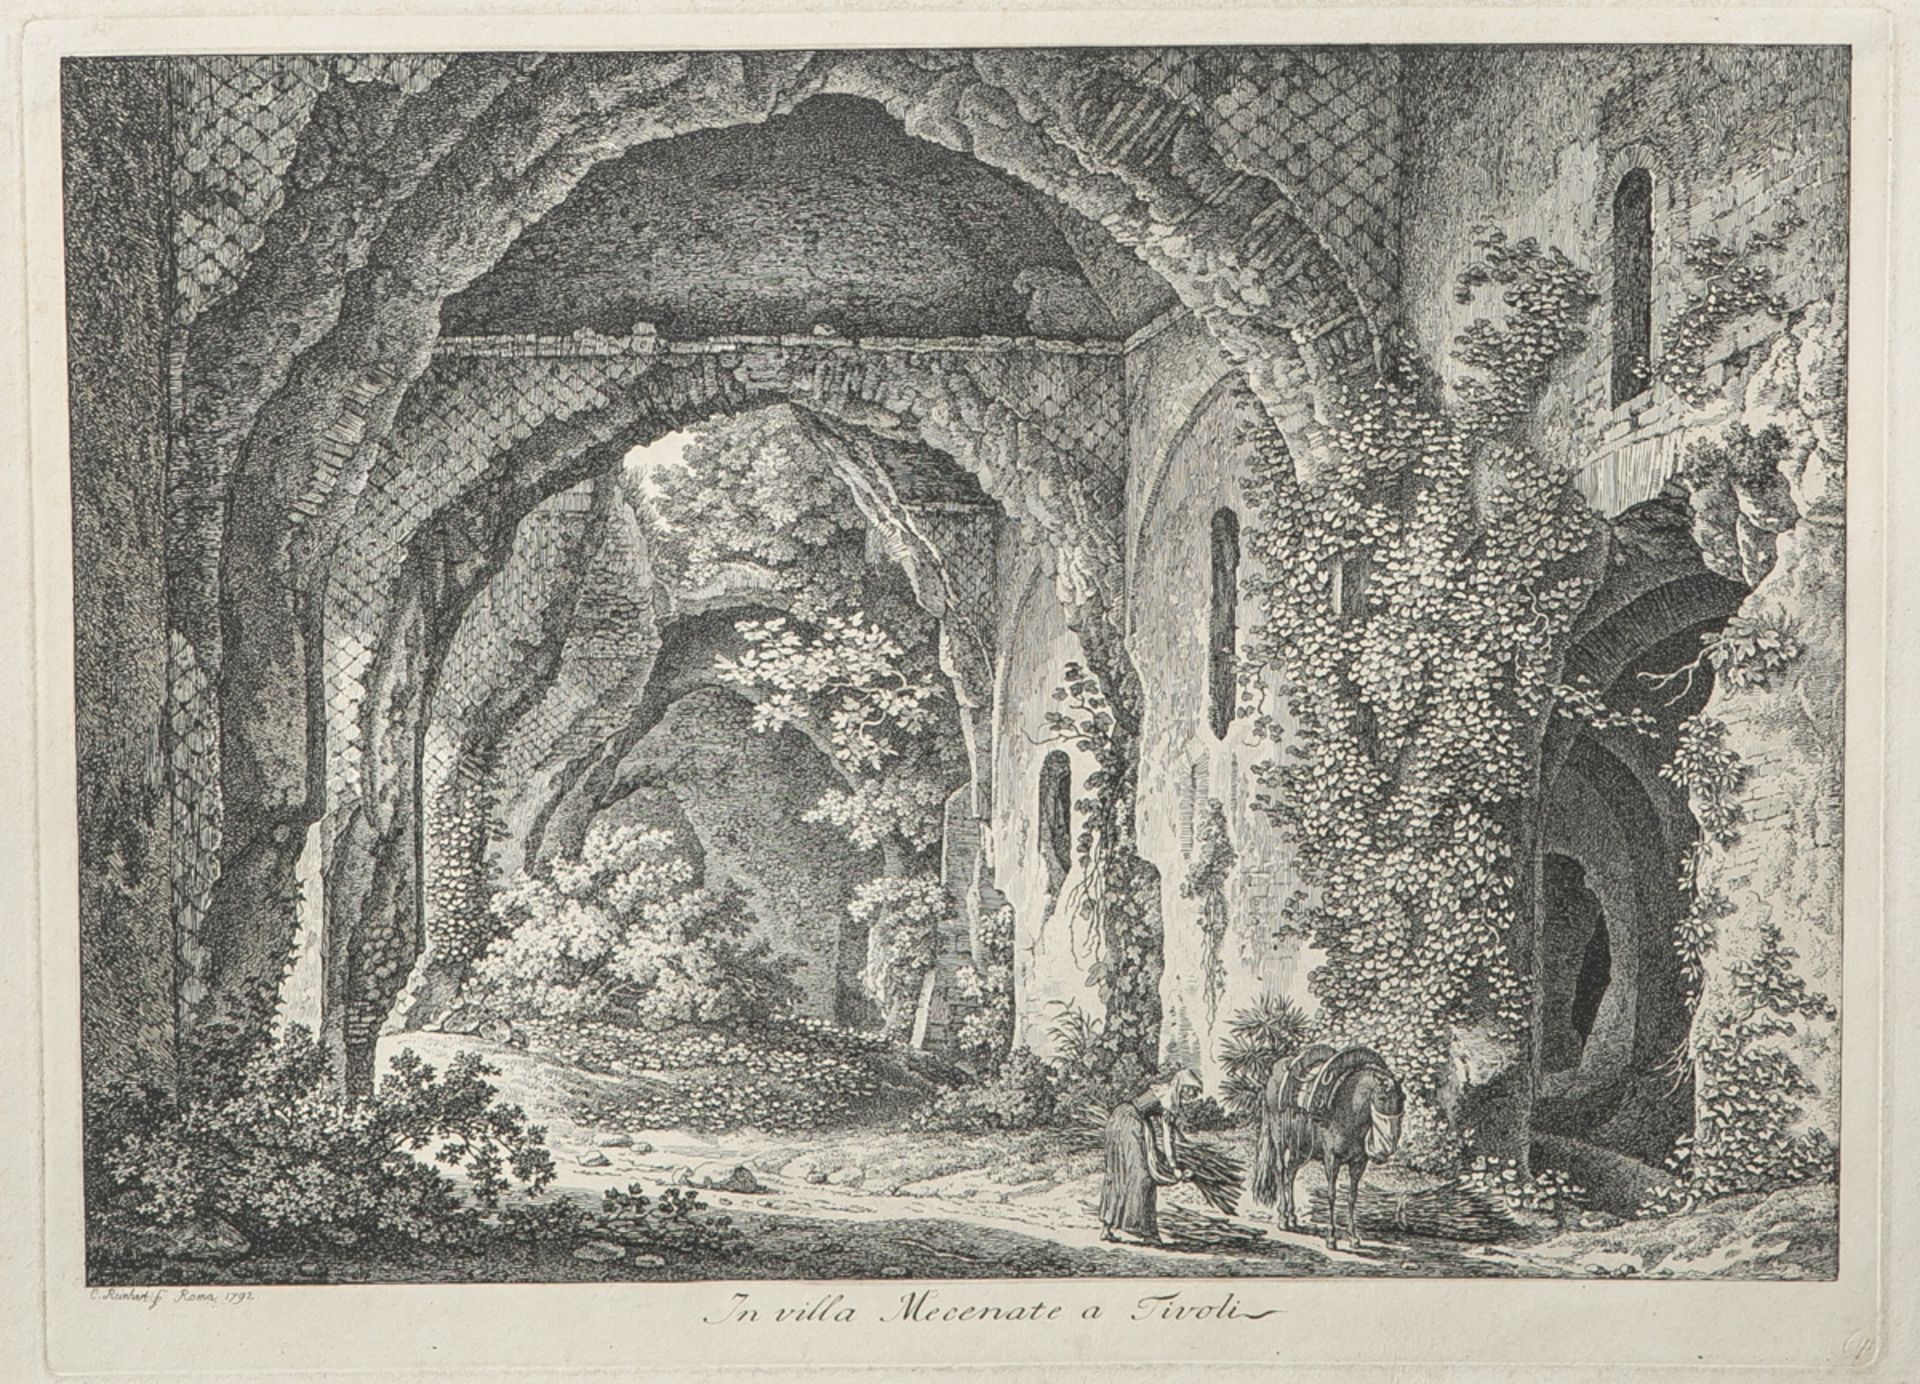 Reinhart, Johann Christian (1761-1847), "In villa Mecenate a Tivoli" (1792), Radierung,li. u. in